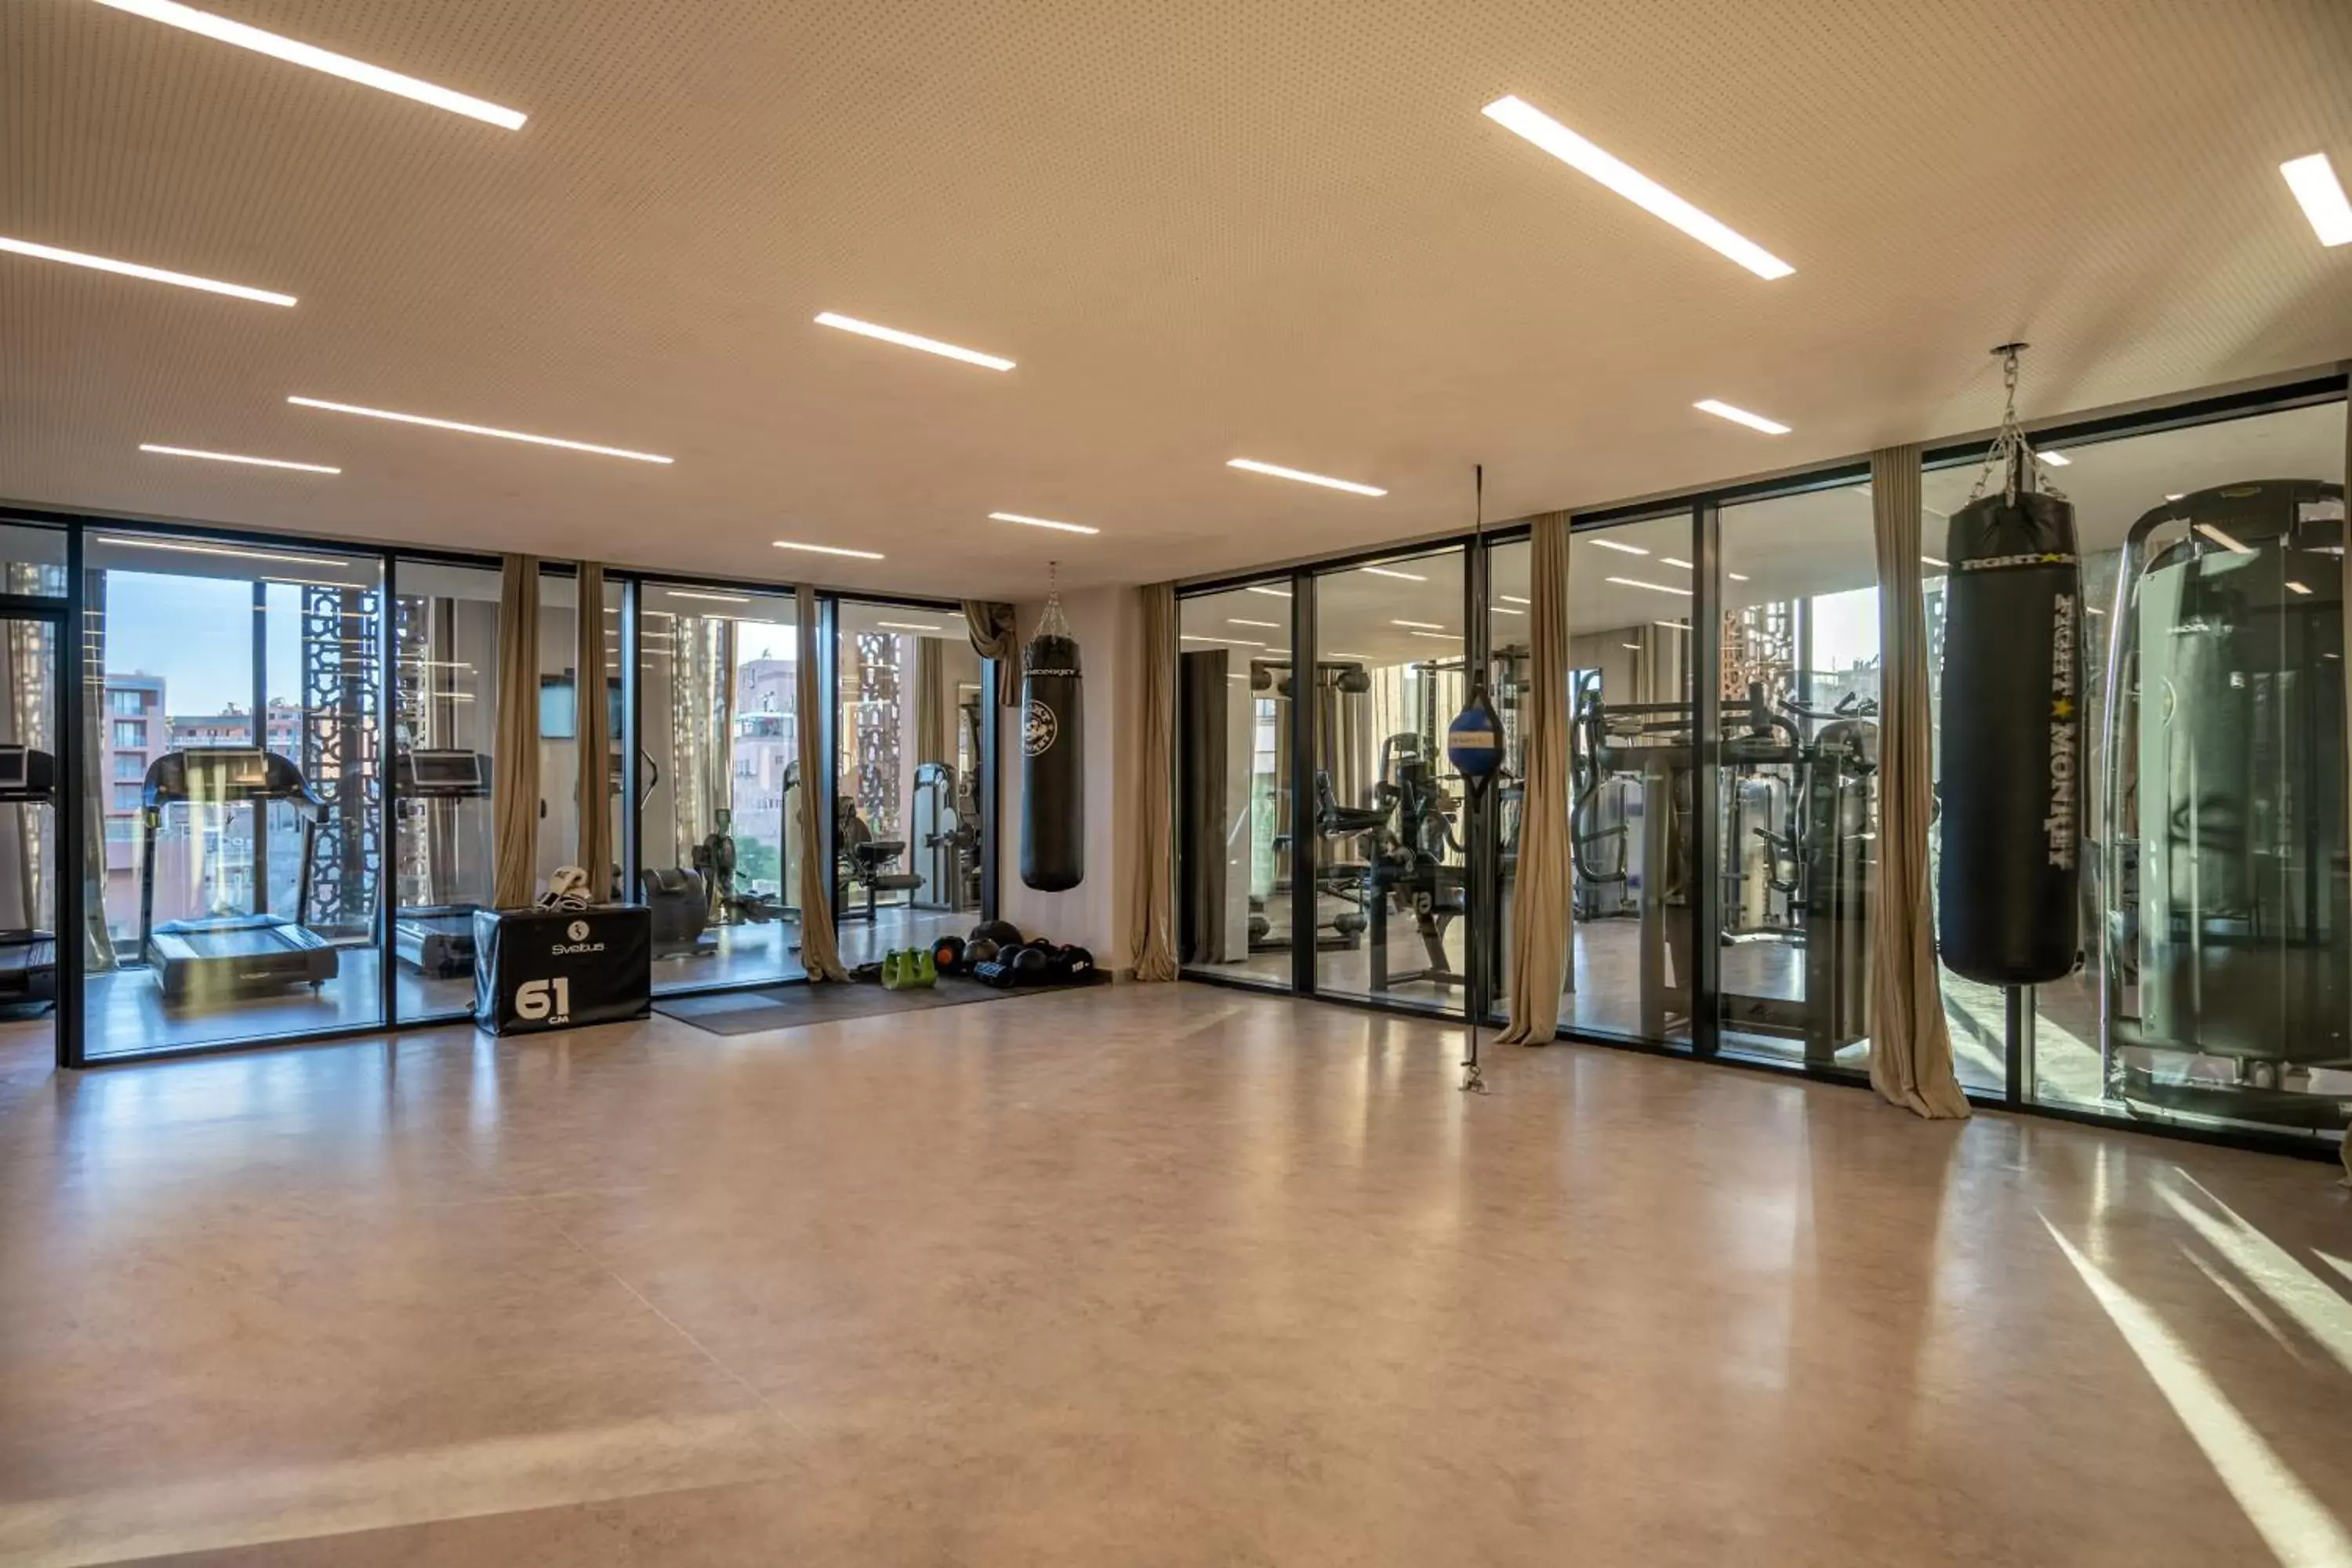 Fitness centre/facilities, Fitness Center/Facilities in Radisson Blu Marrakech, Carré Eden